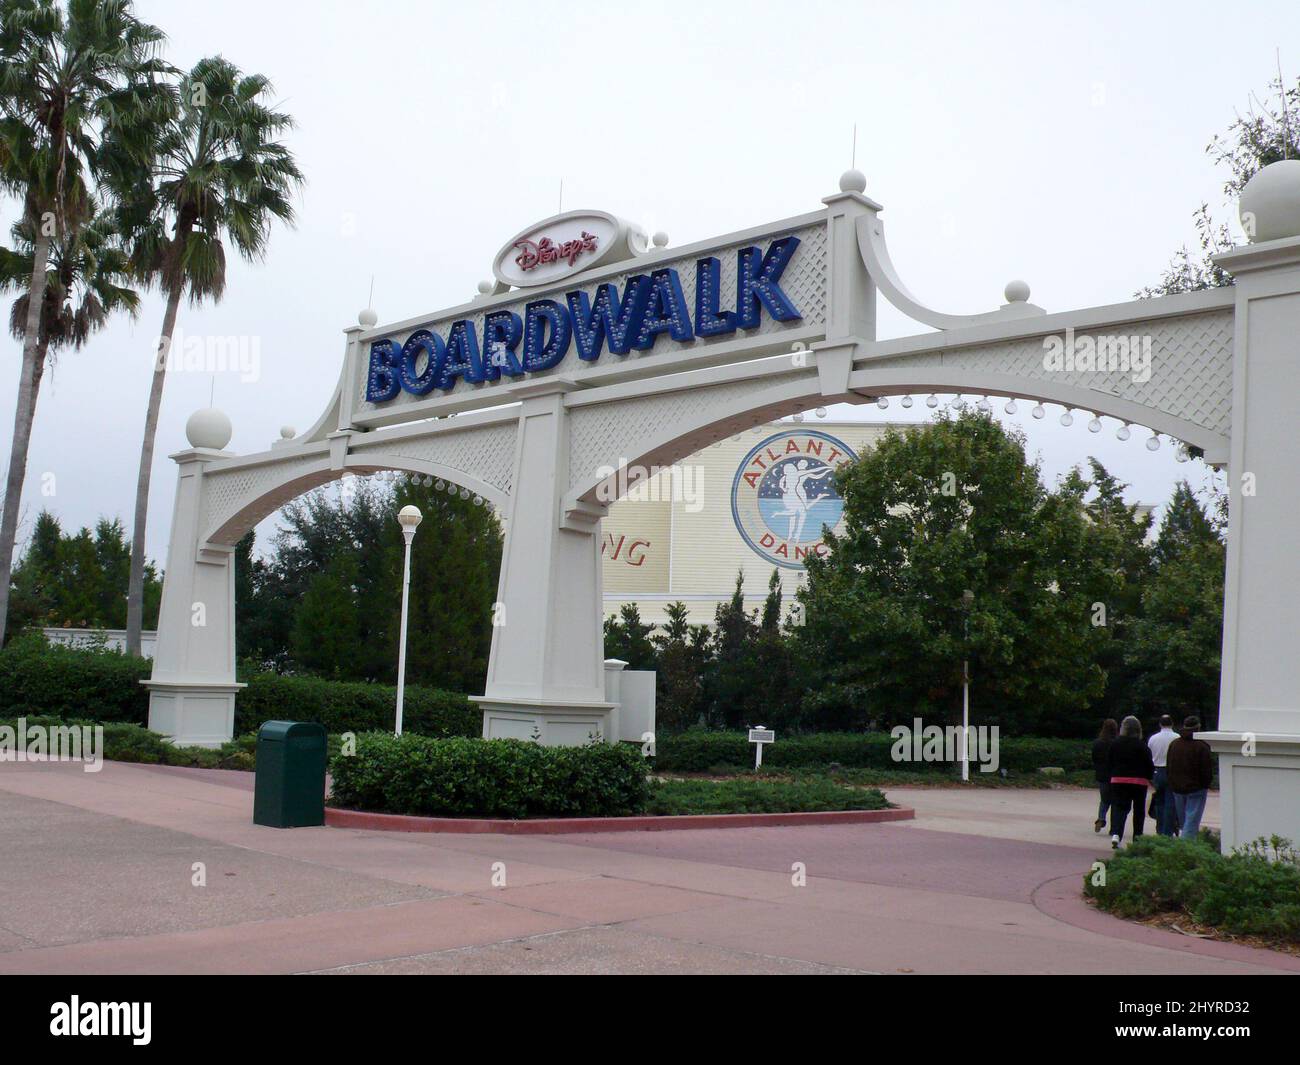 Disney's Broadwalk at Walt Disney World in Orlando, Florida. Stock Photo